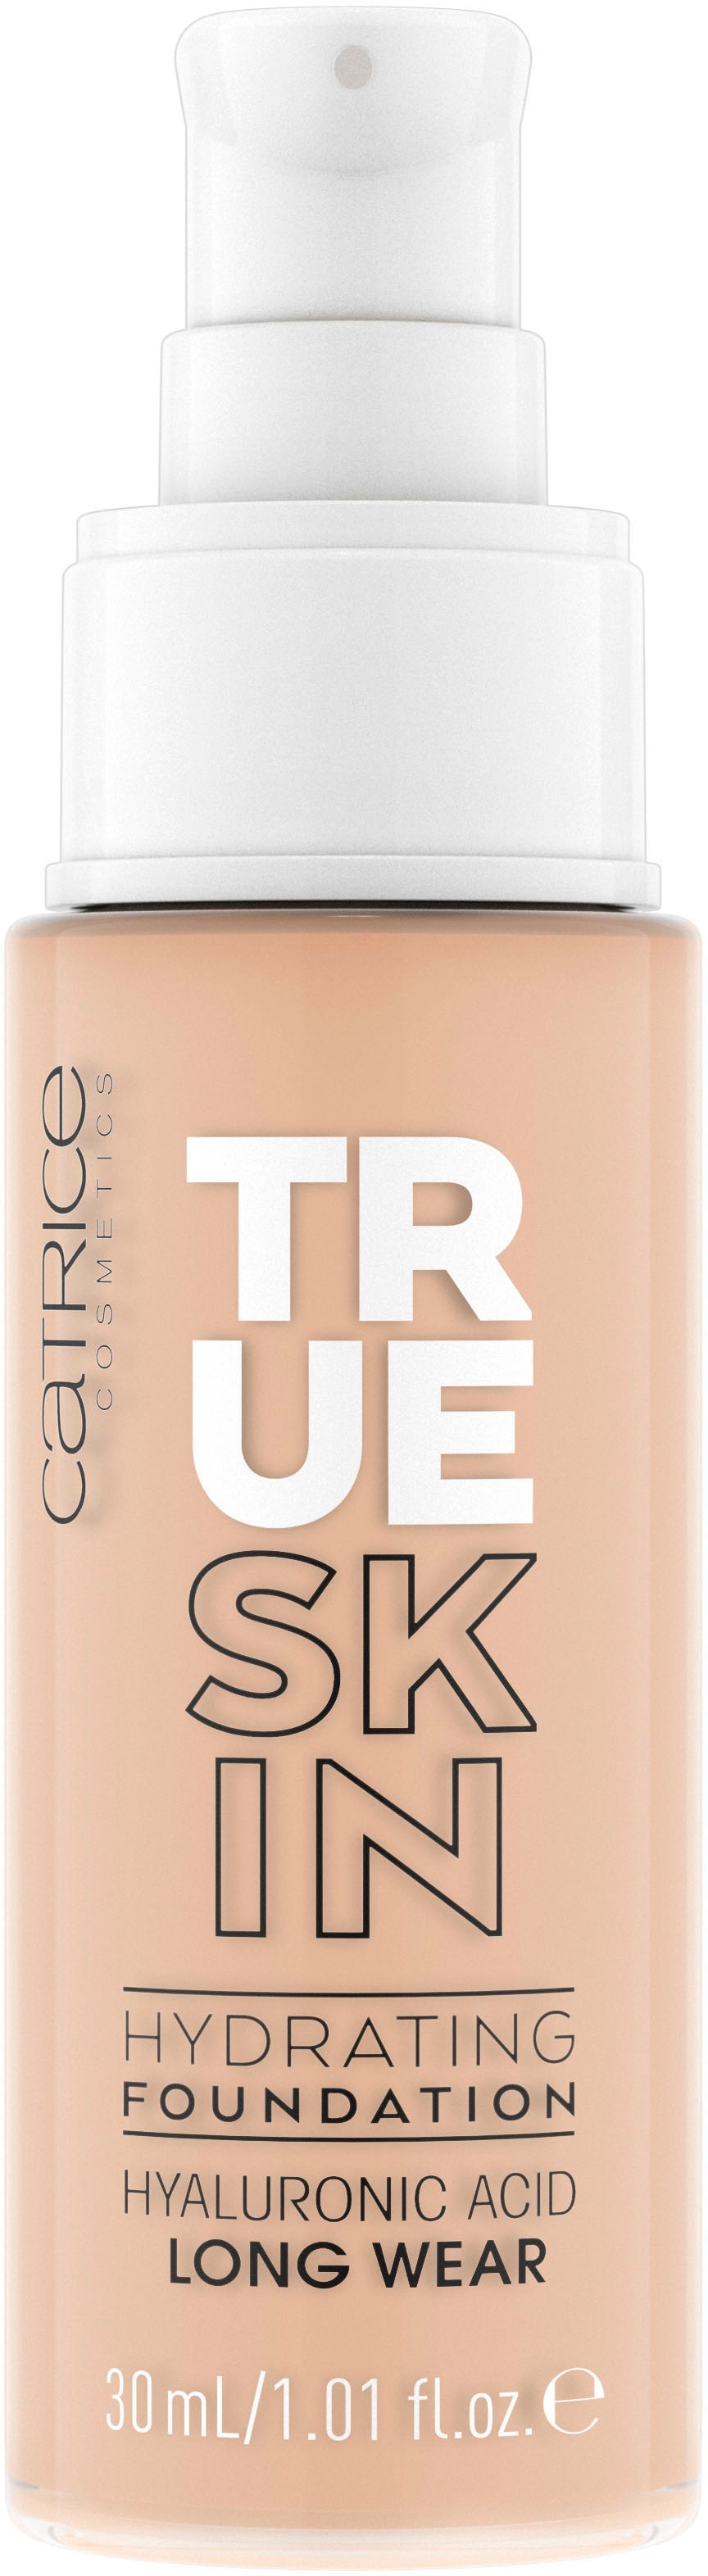 3 Make-up tlg.) Skin Foundation«, Catrice »True Hydrating (Set,